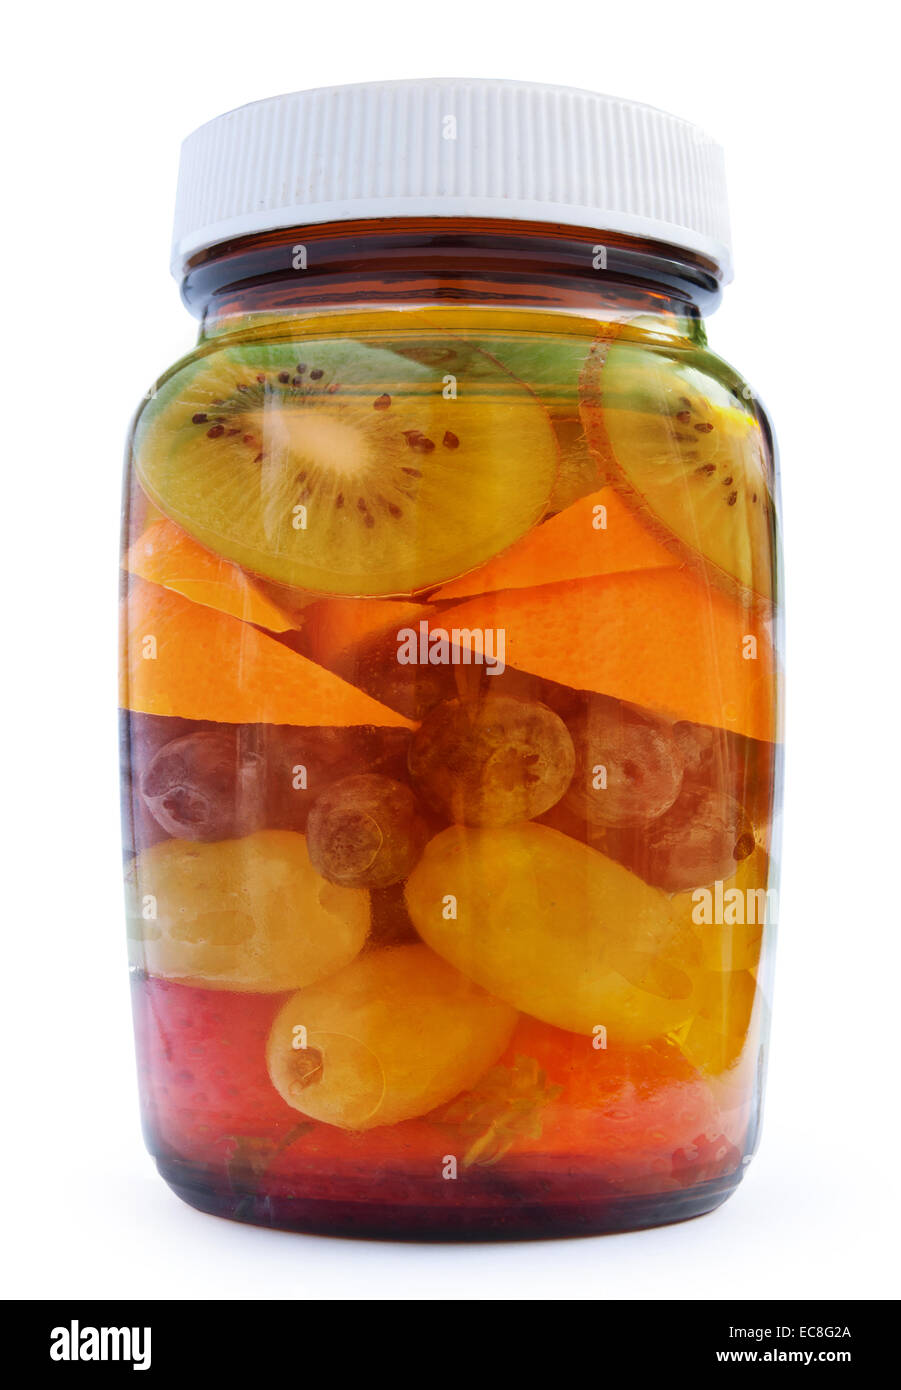 Vitamin fruit bottle Stock Photo